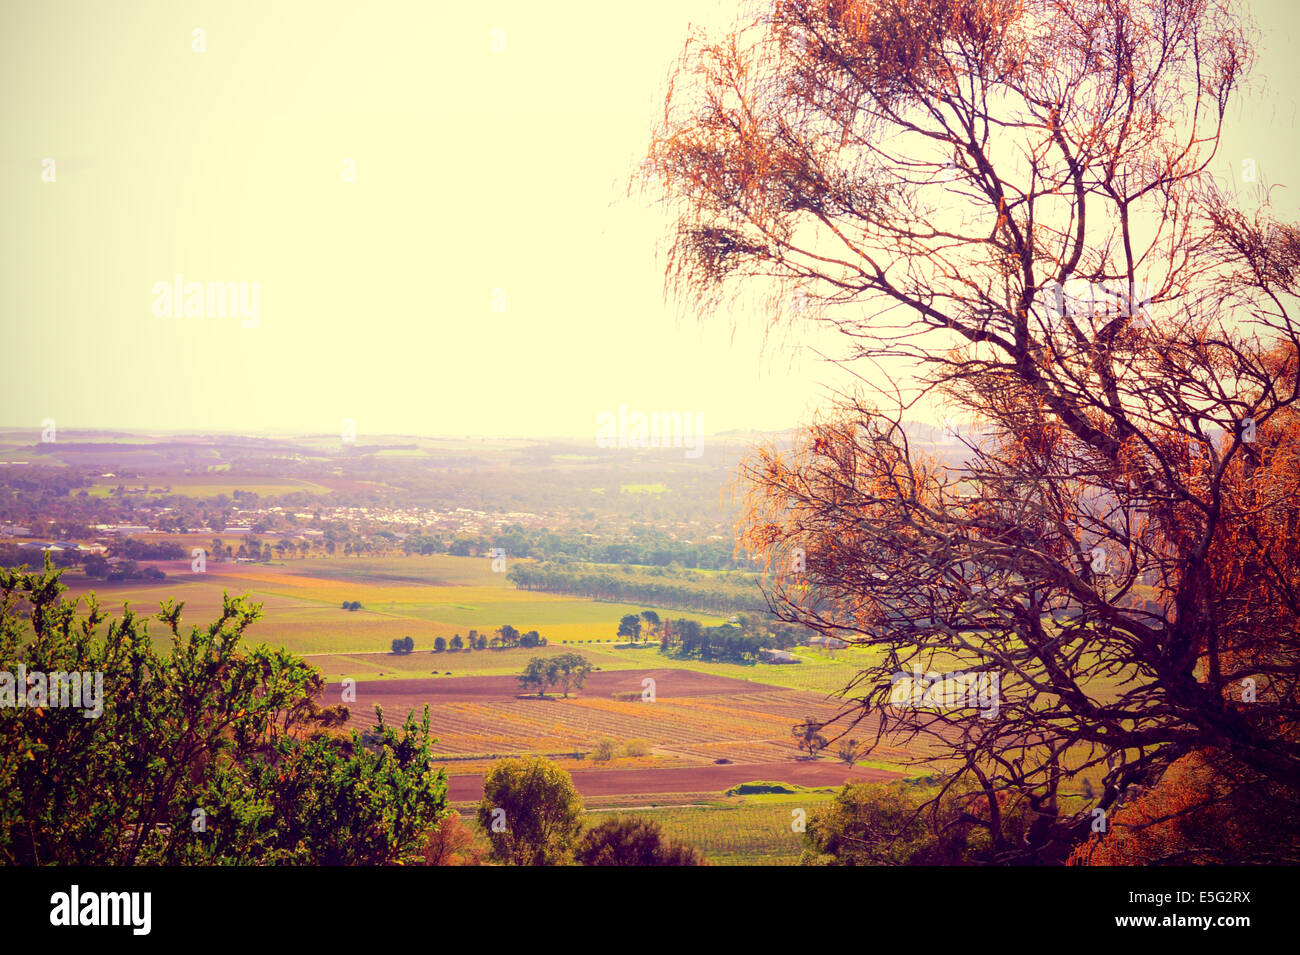 Retro sunset filter style scenic views overlooking Barossa Valley, South Australian prominent wine growing region Stock Photo